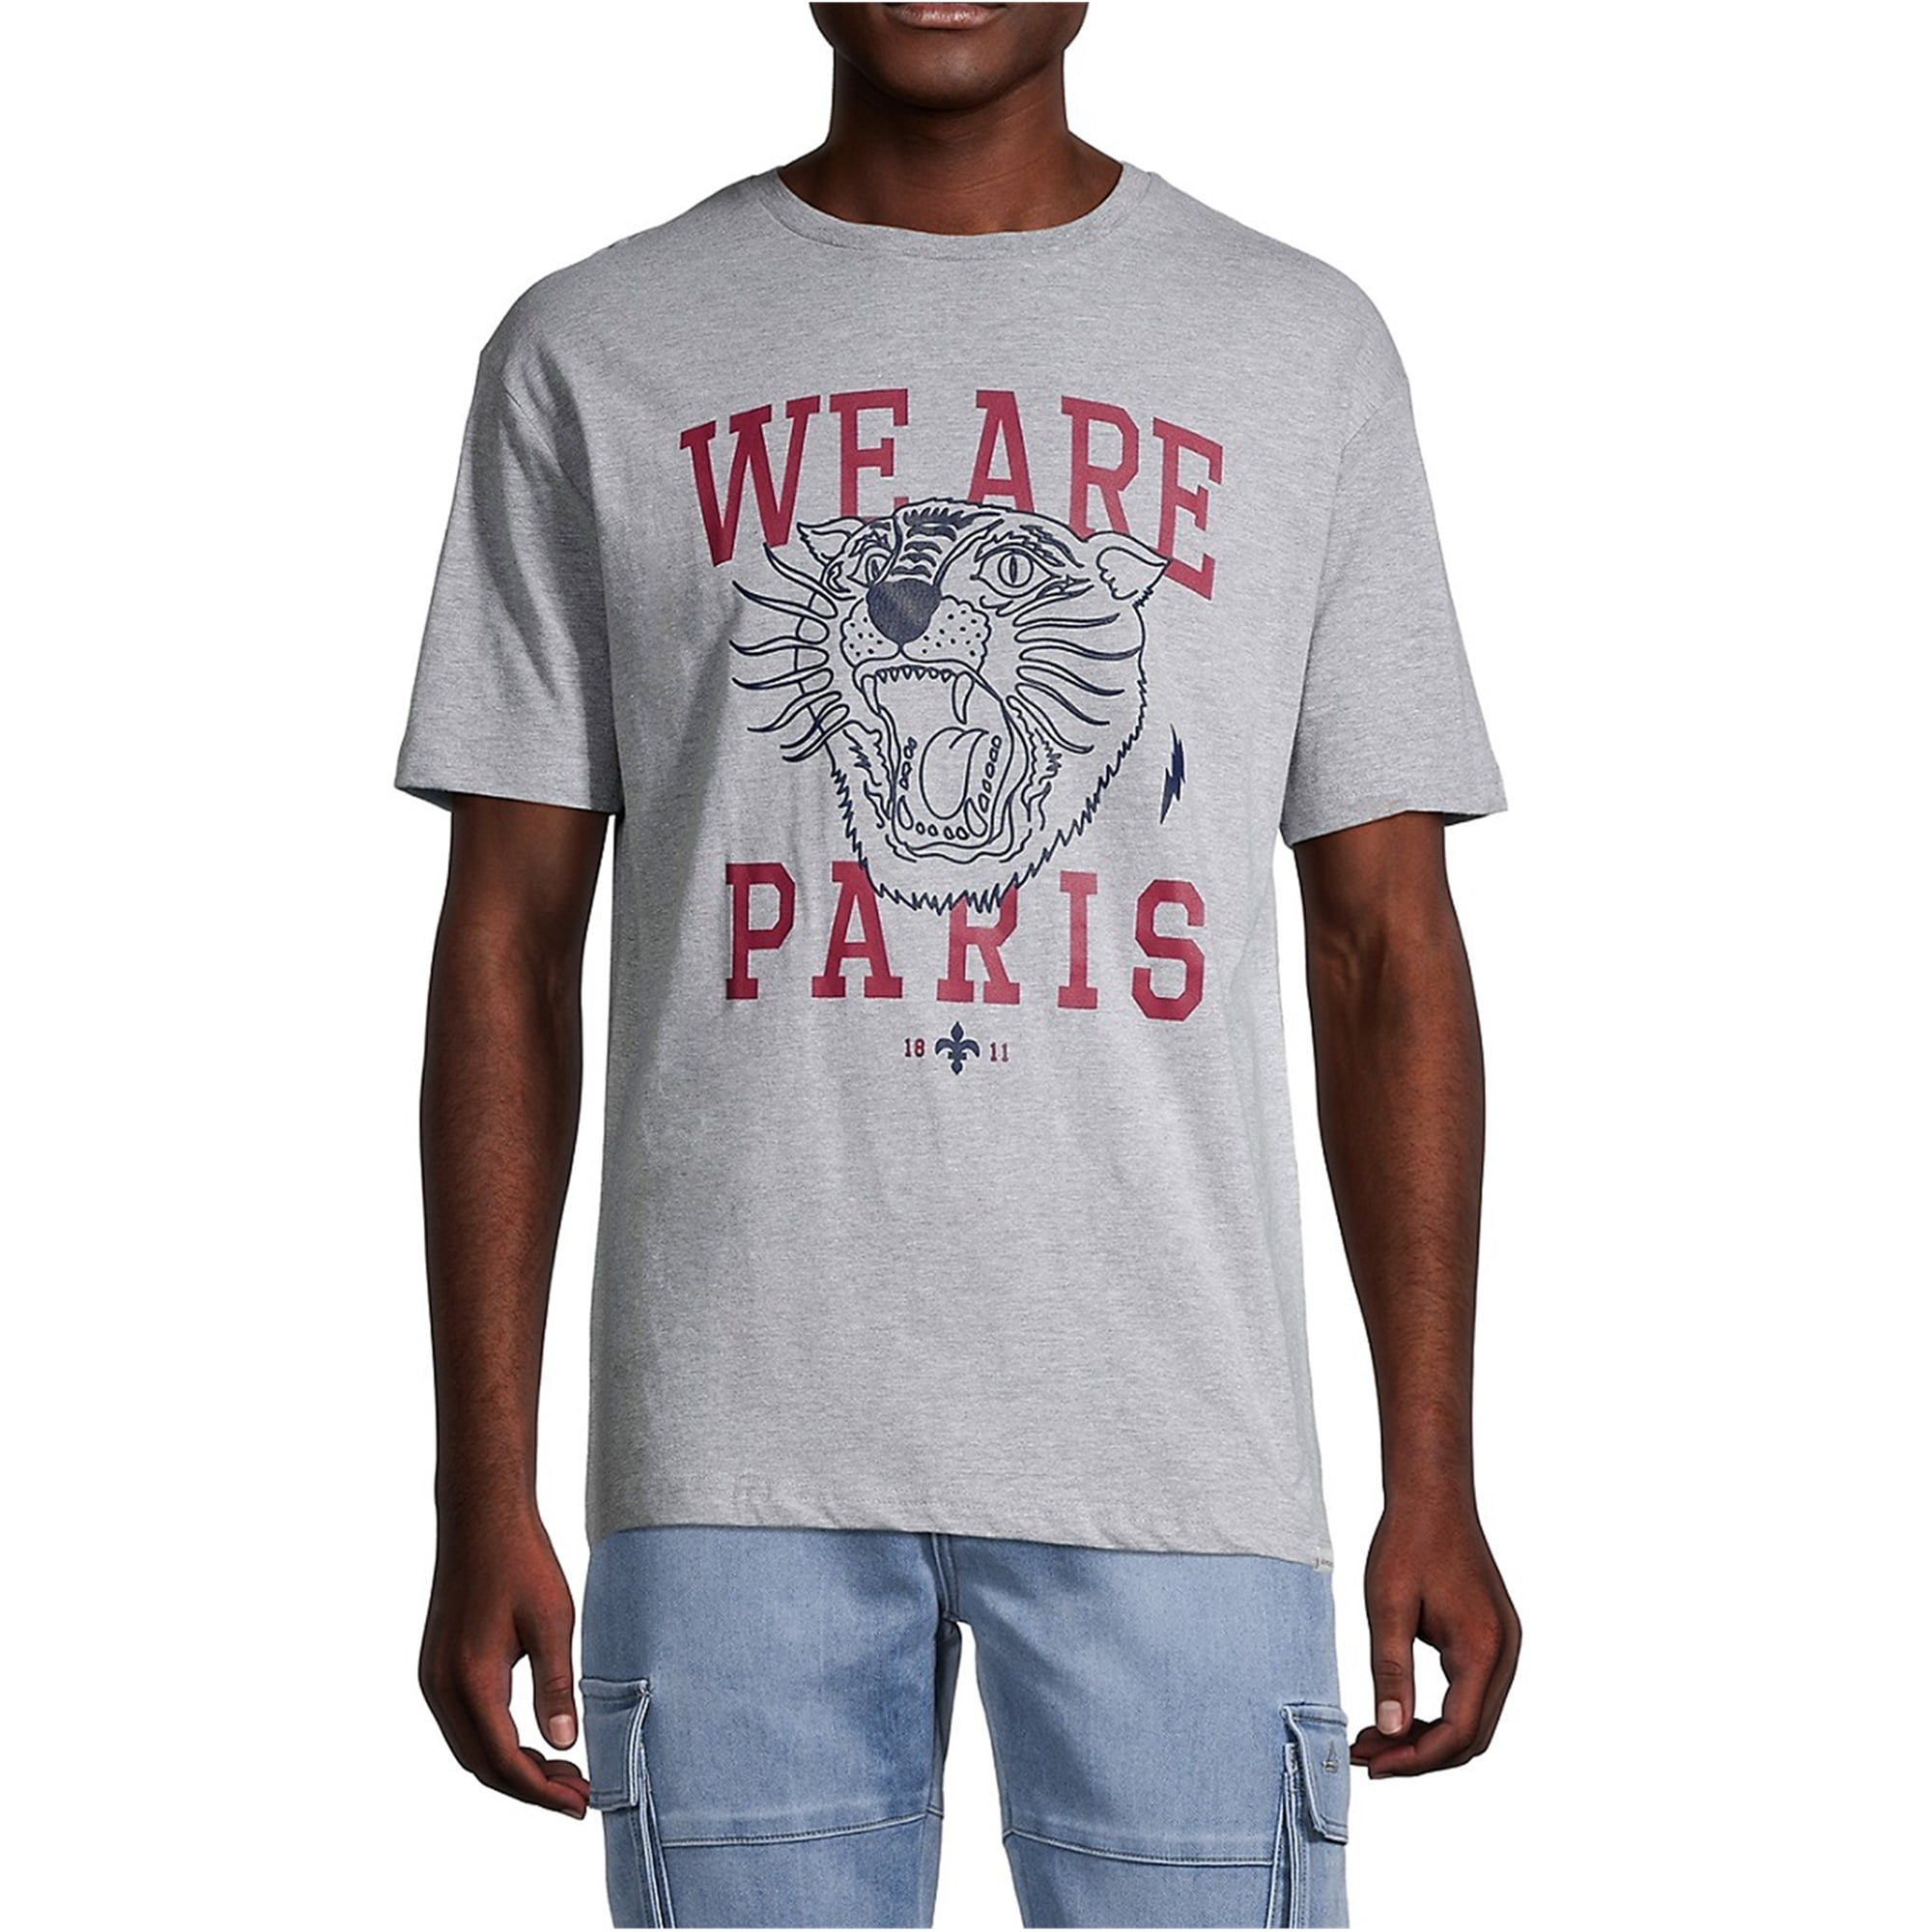 Elevenparis Mens We Are Paris Graphic T-Shirt, Grey, Small 